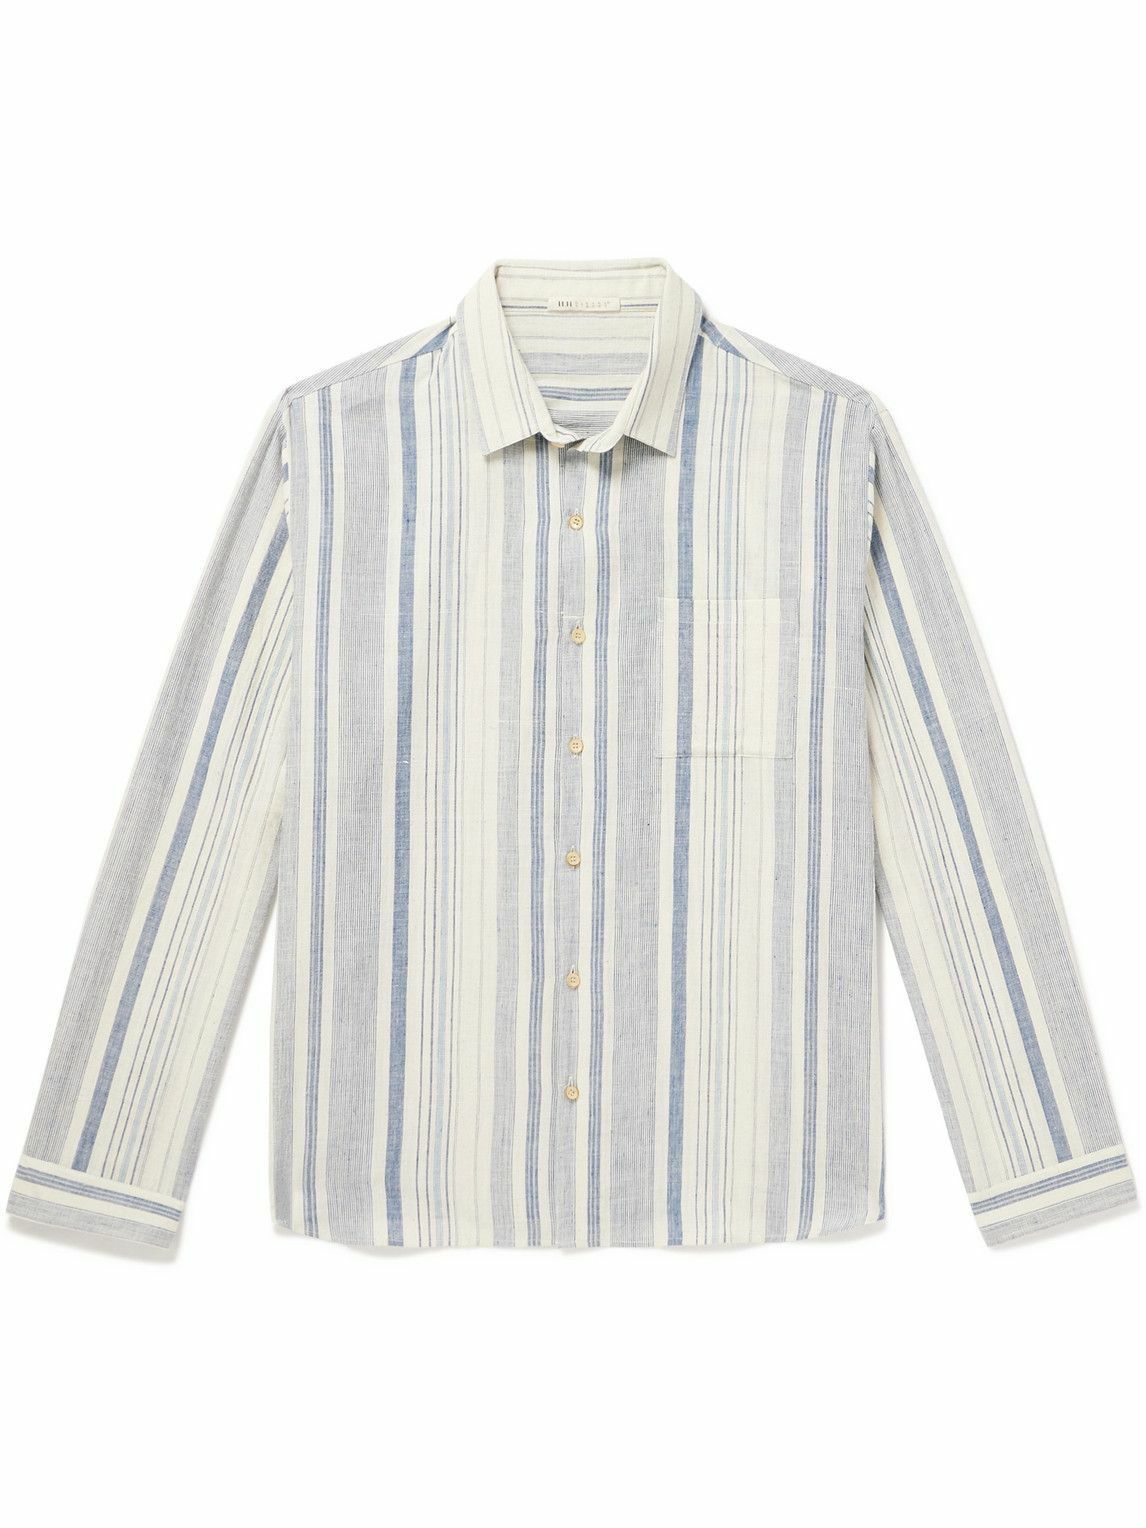 Photo: 11.11/eleven eleven - Striped Organic Cotton Shirt - Blue